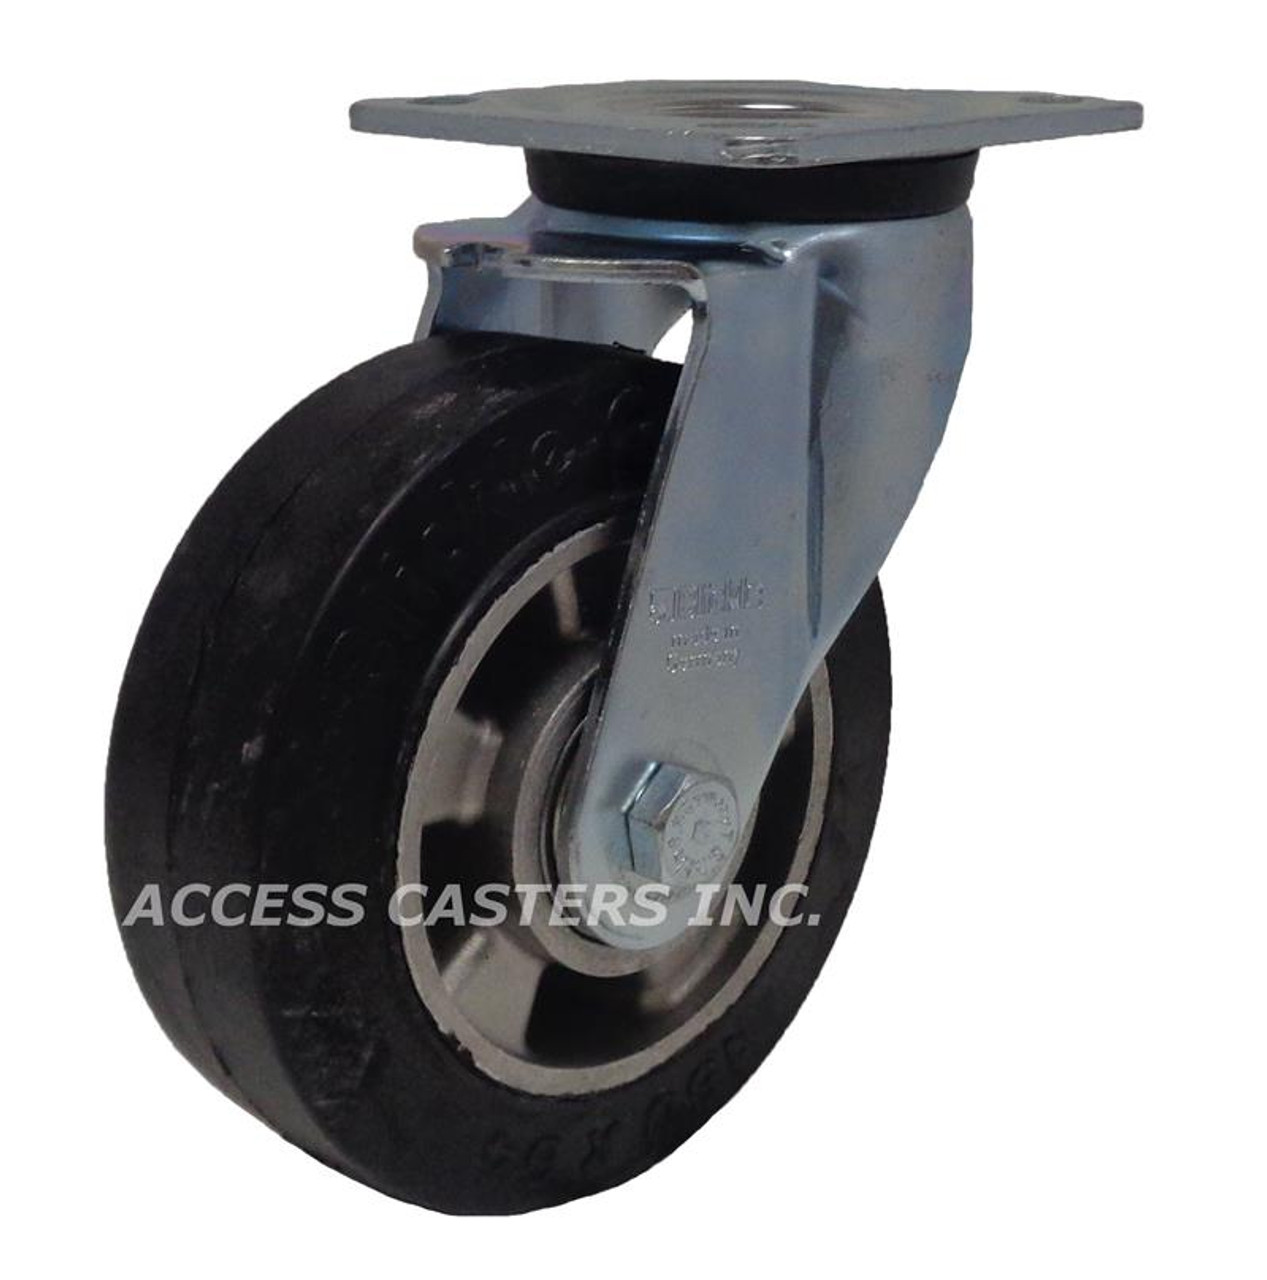 LEH-ALEV 160K-14 Blickle 6" Swivel Caster ALEV Wheel Plate Caster Ball Bear